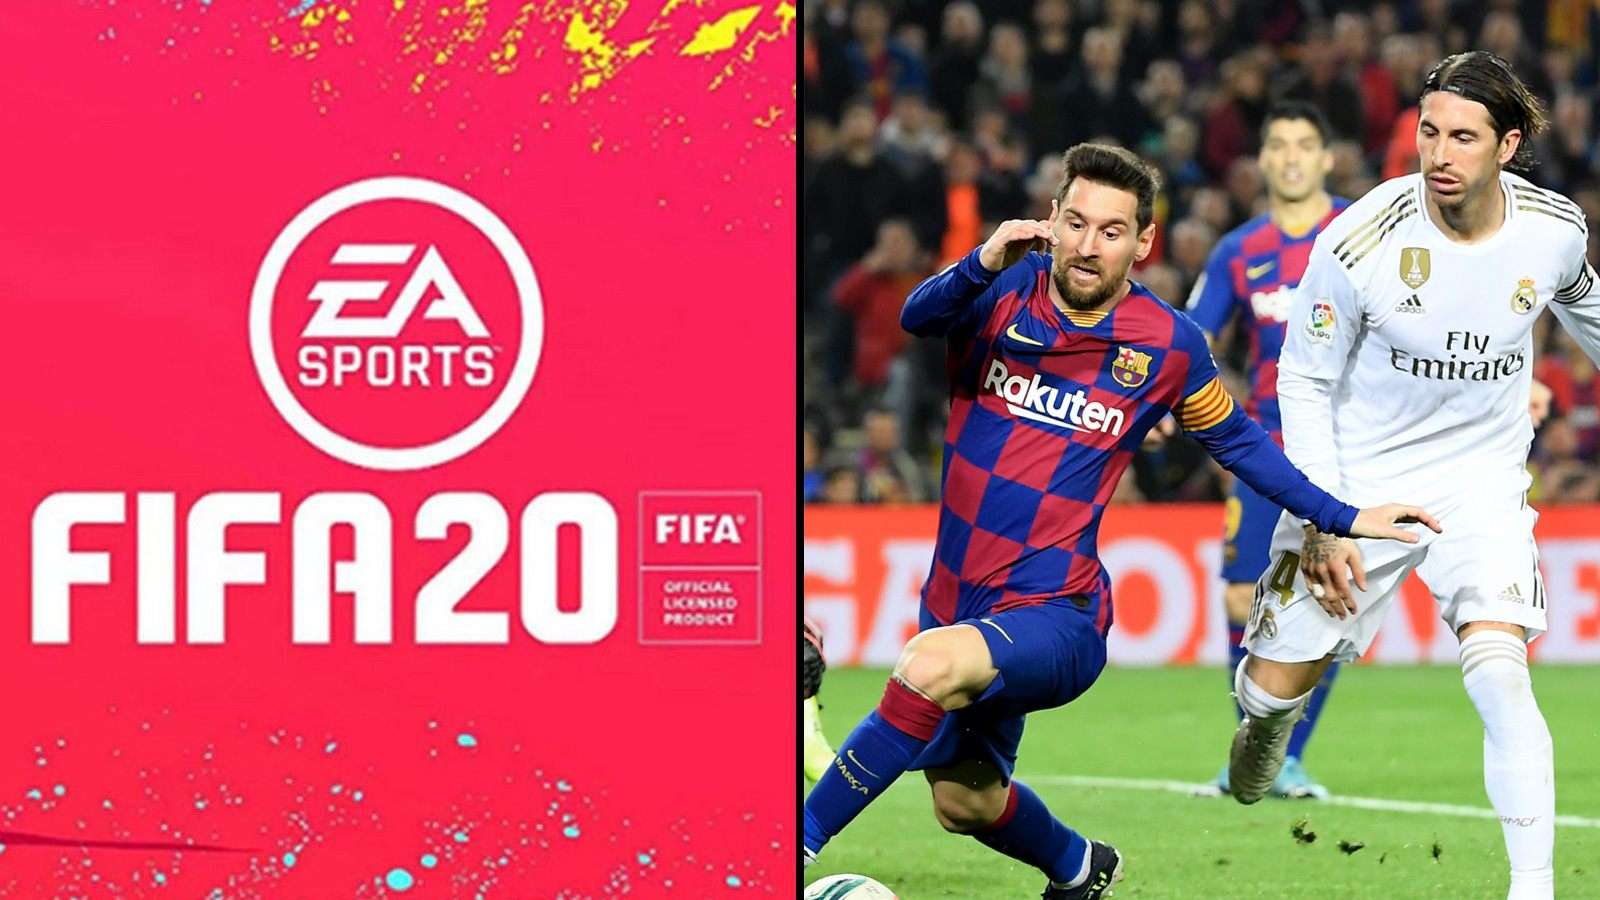 Messi et Sergio Ramos lors d'un match FC Barcelone vs Real Madrid et logo FIFA 20